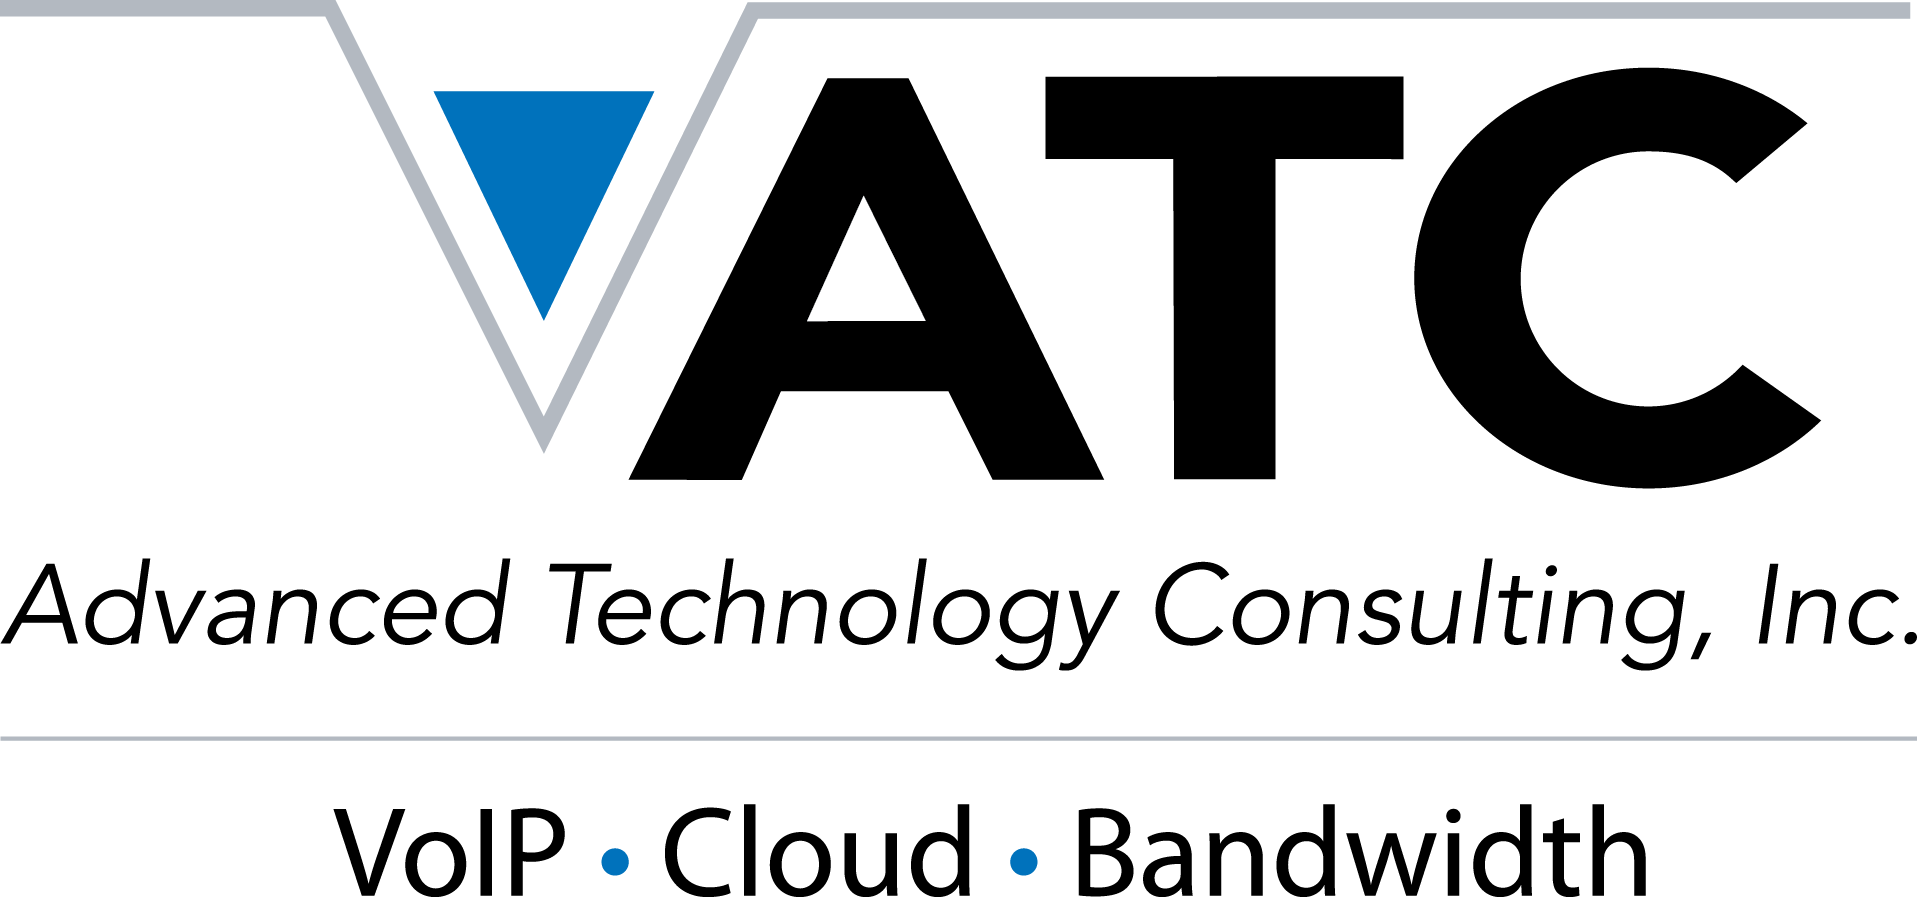 Advanced Technology Consulting - Vatc Logo (1917x897)